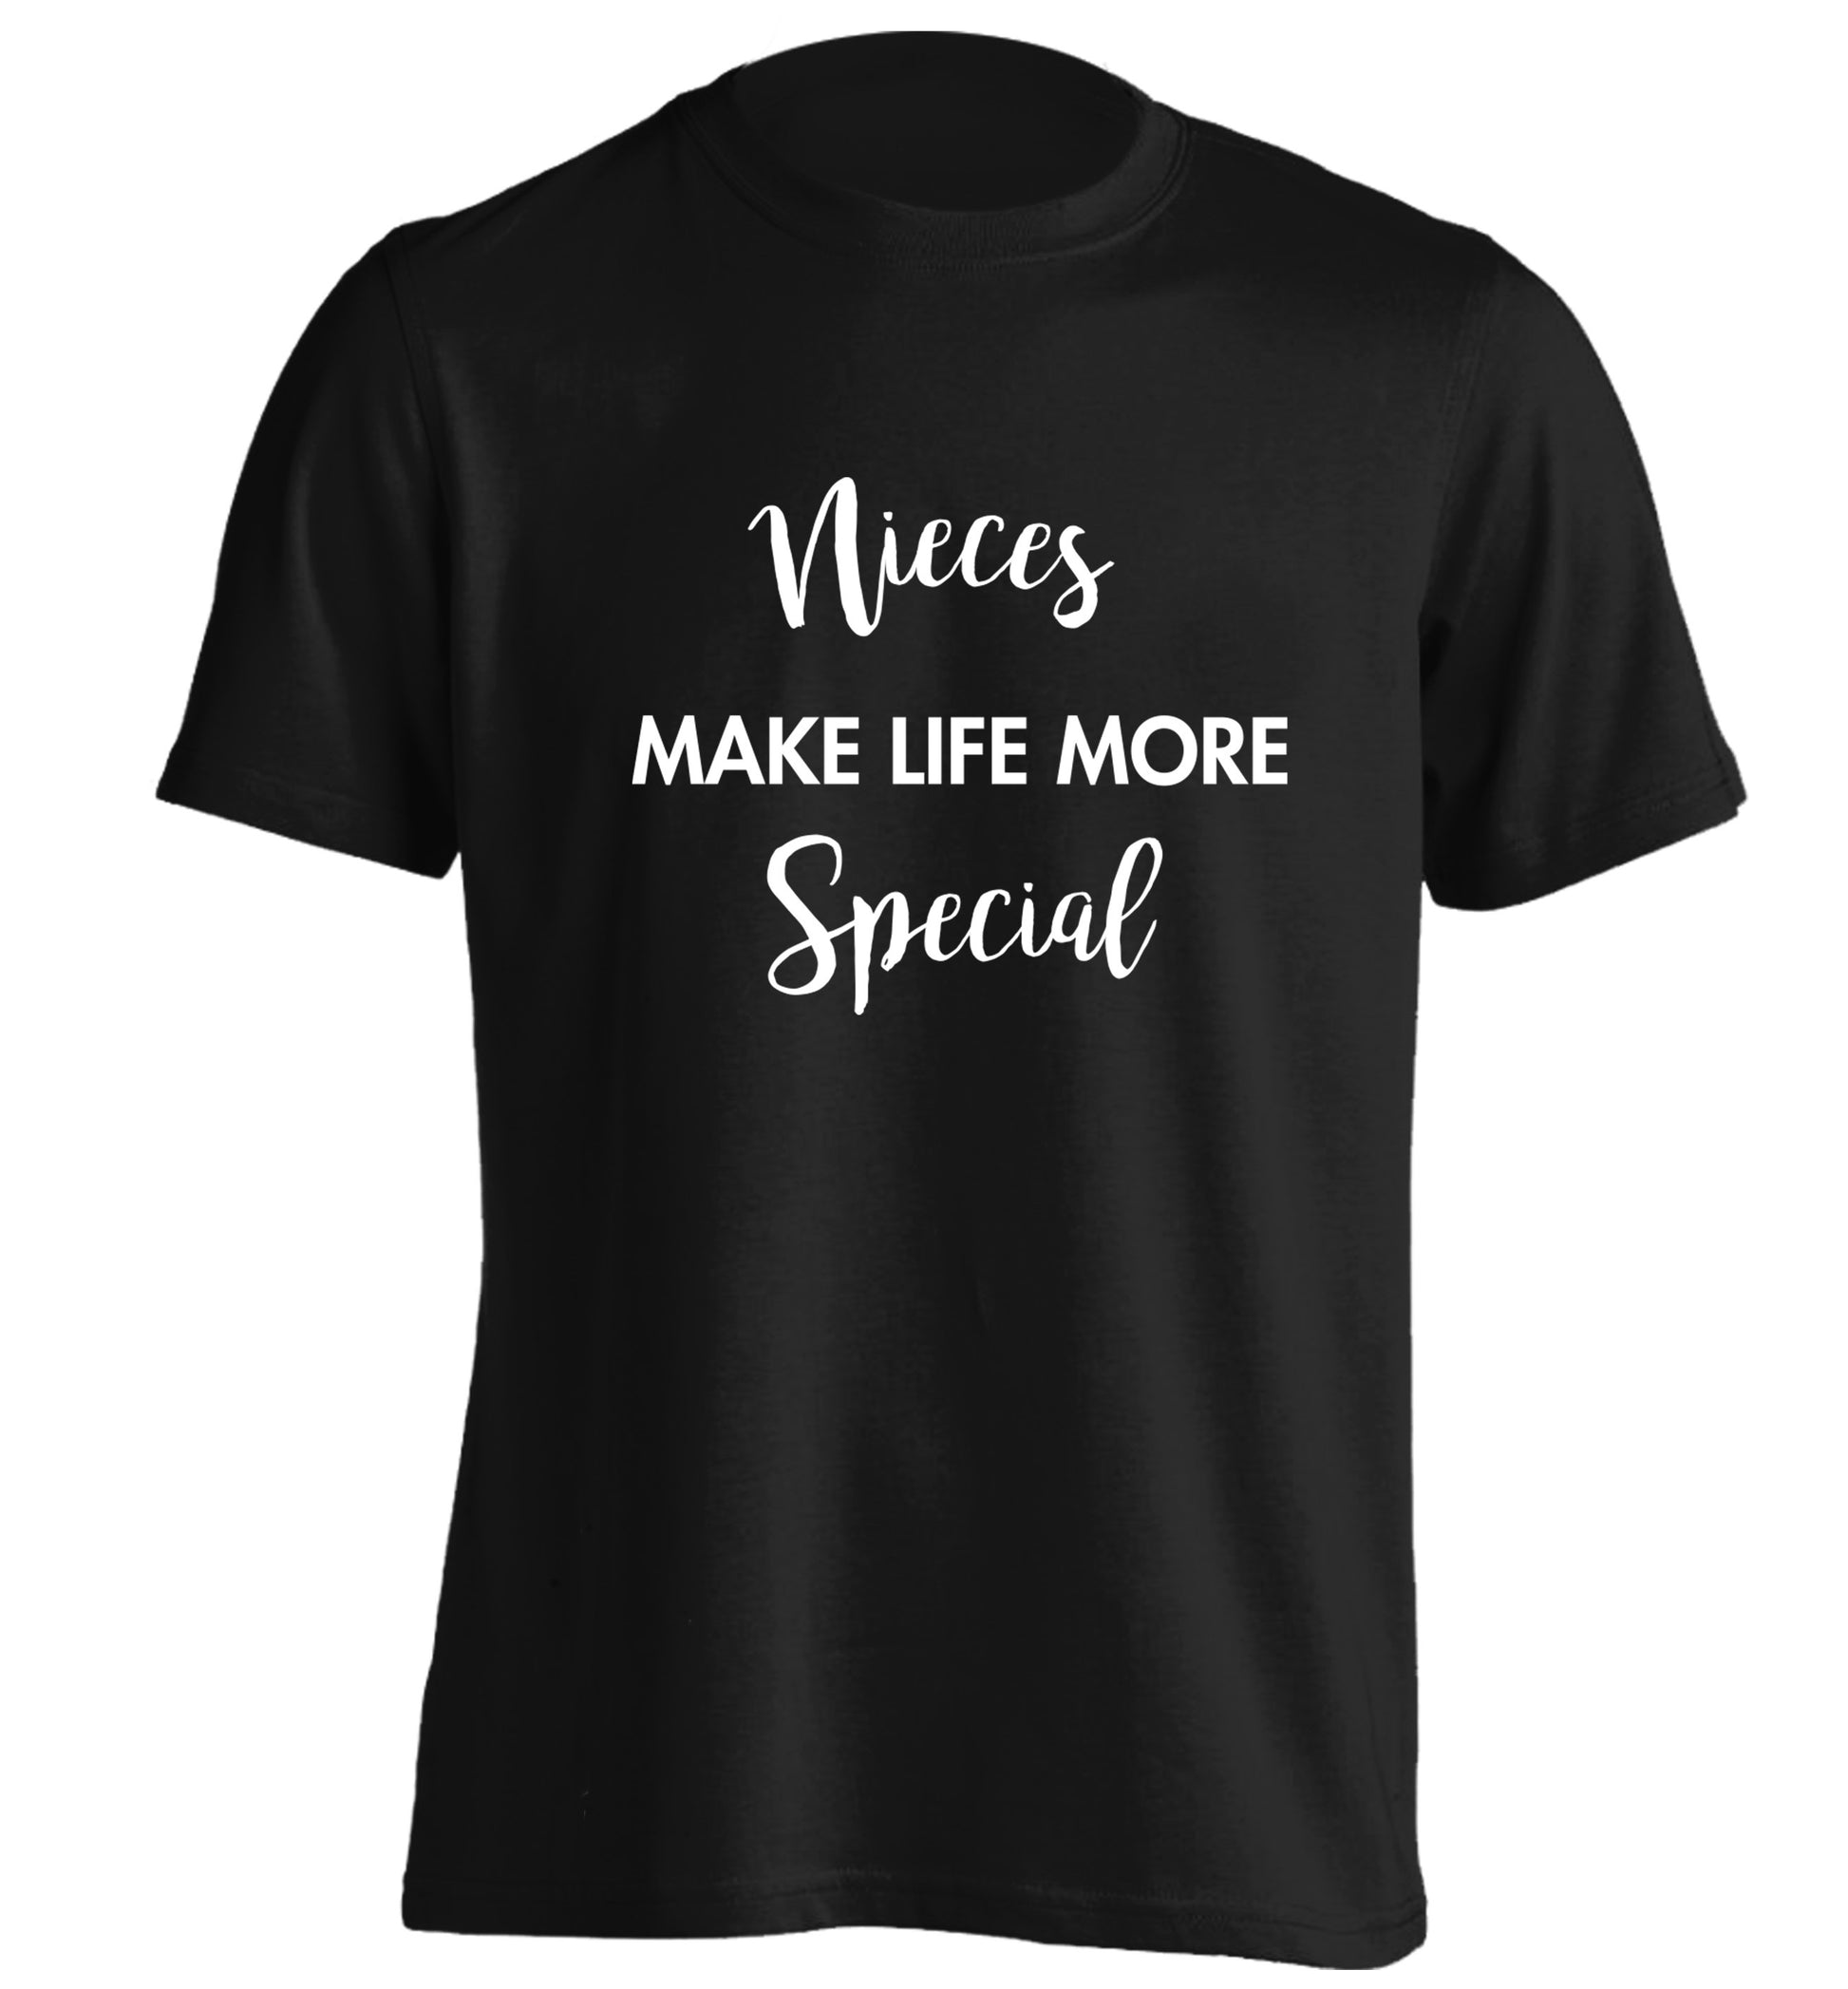 Nieces make life more special adults unisex black Tshirt 2XL